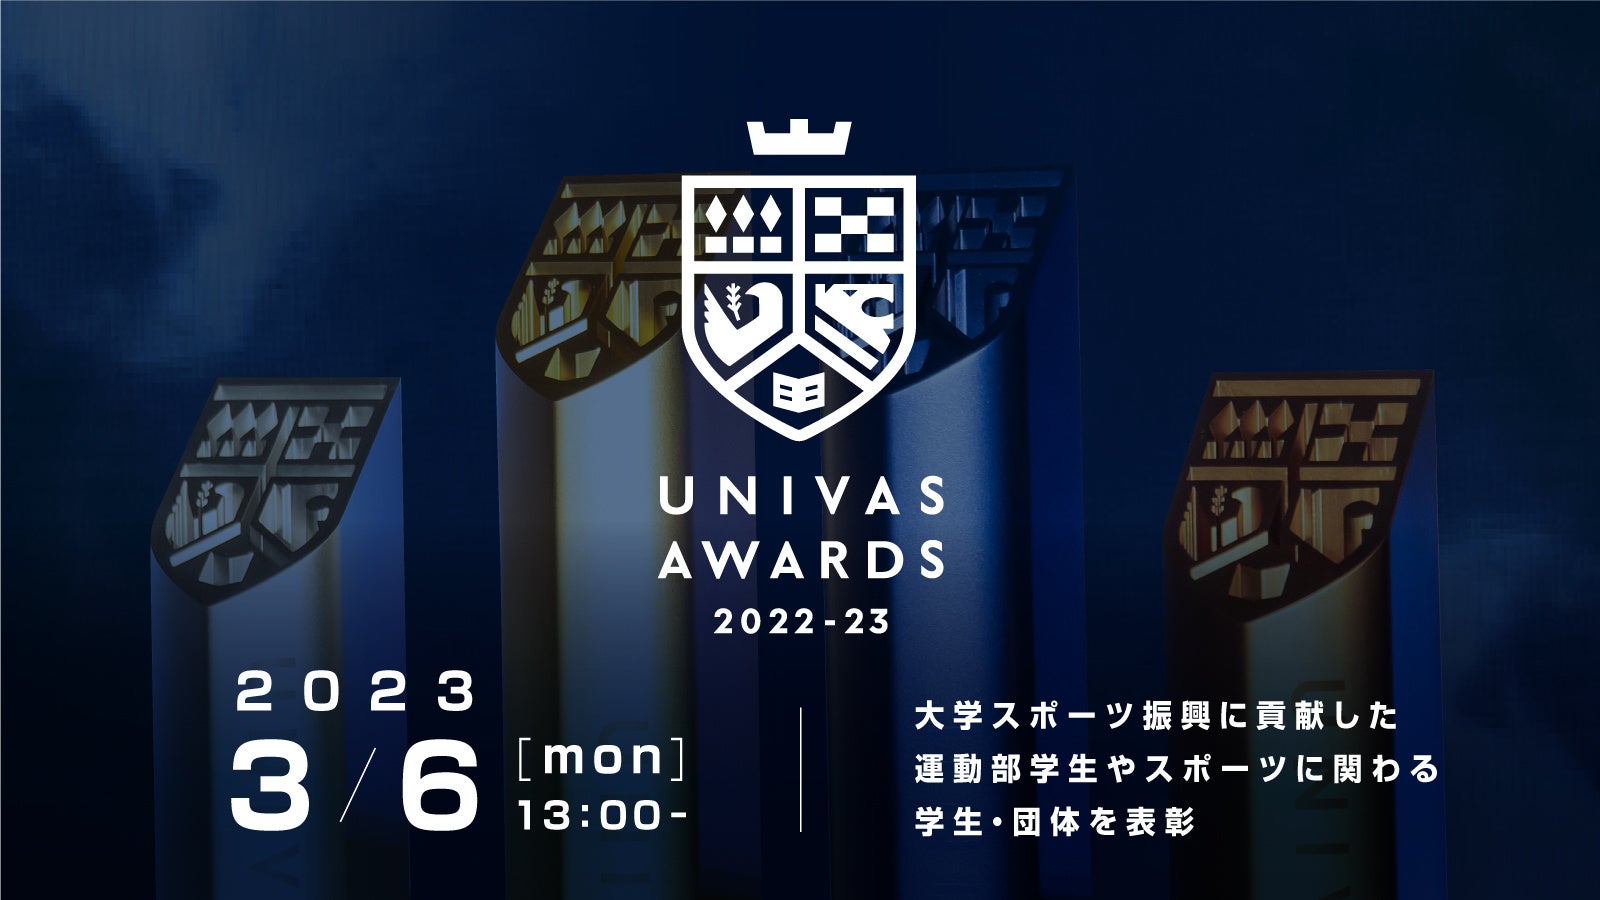 UNIVAS、大学スポーツ振興に貢献された学生および団体を表彰する制度『UNIVAS AWARDS 2022-23』にフィギュアスケート 三原舞依選手、ボクシング 入江聖奈選手など優秀賞に選出